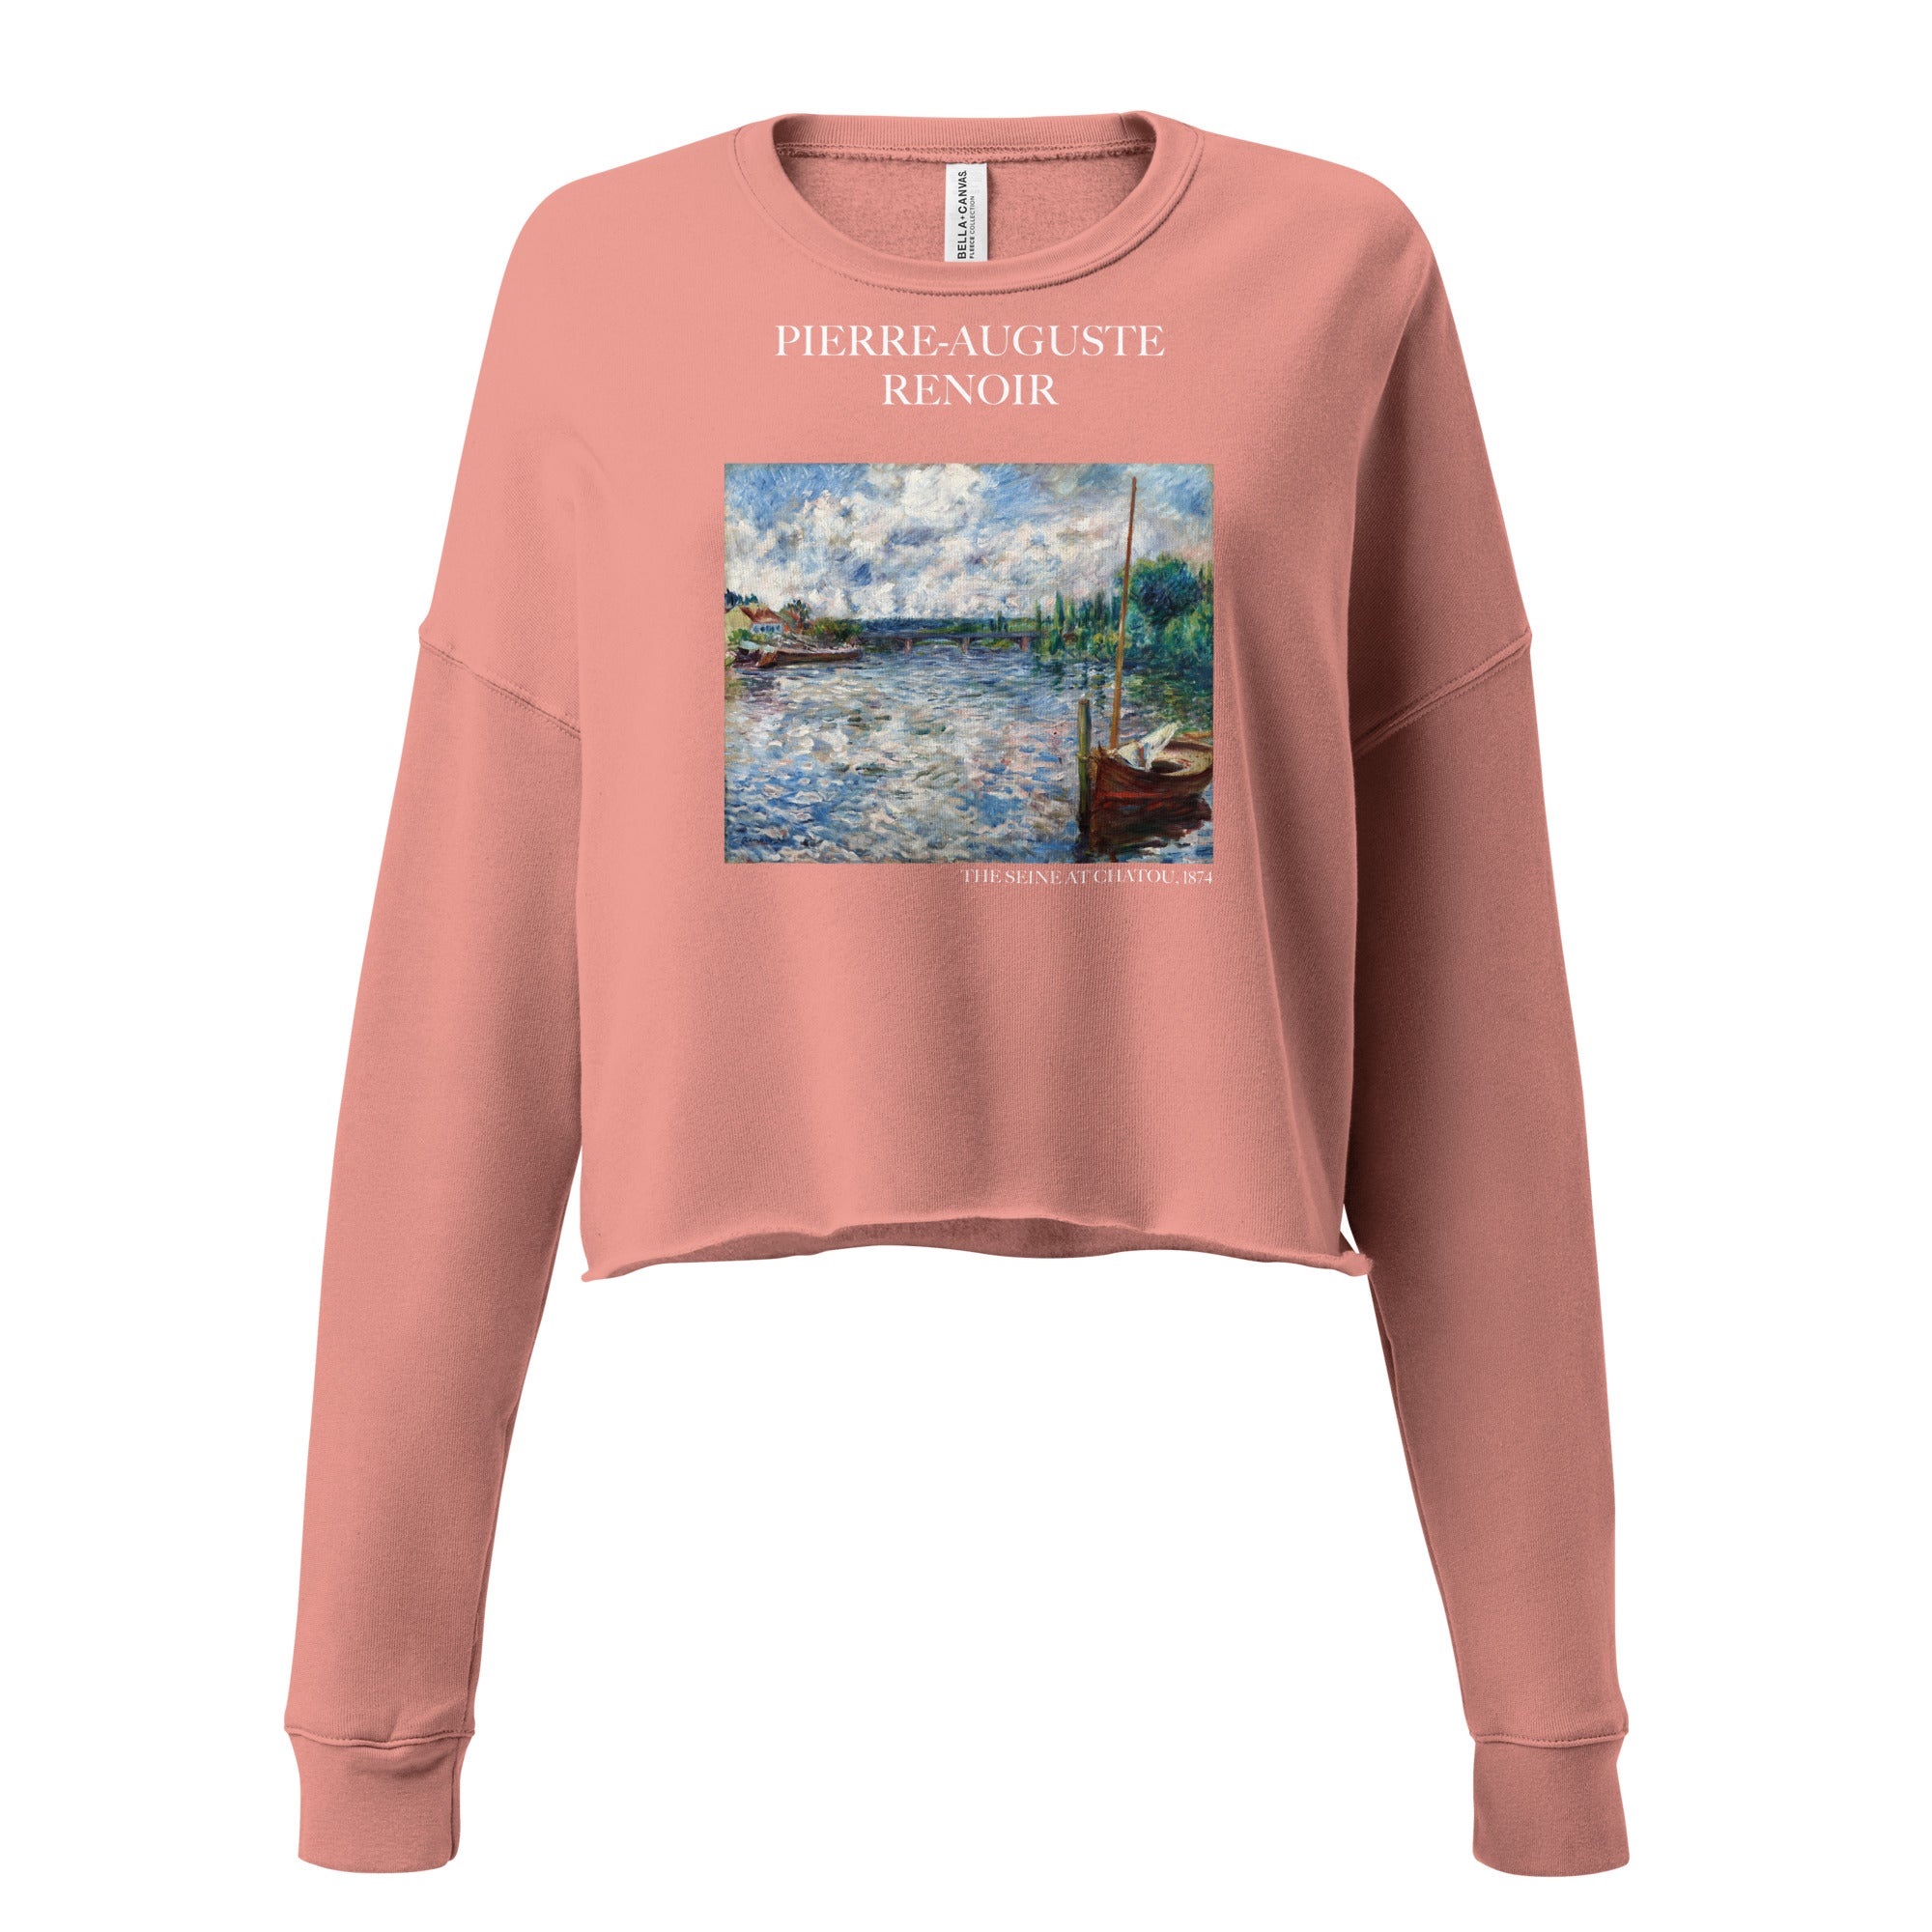 Pierre-Auguste Renoir 'The Seine at Chatou' Famous Painting Cropped Sweatshirt | Premium Art Cropped Sweatshirt